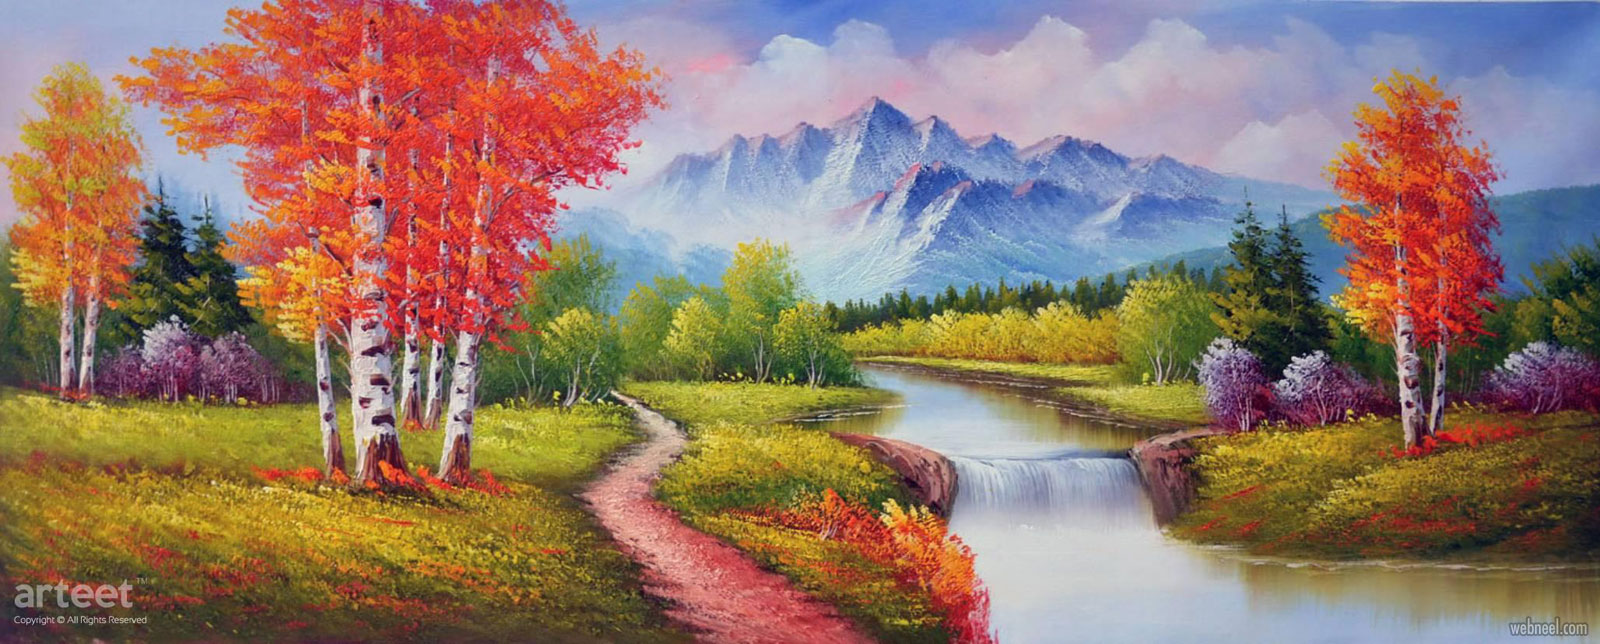 nature landscape oil painting by arteet